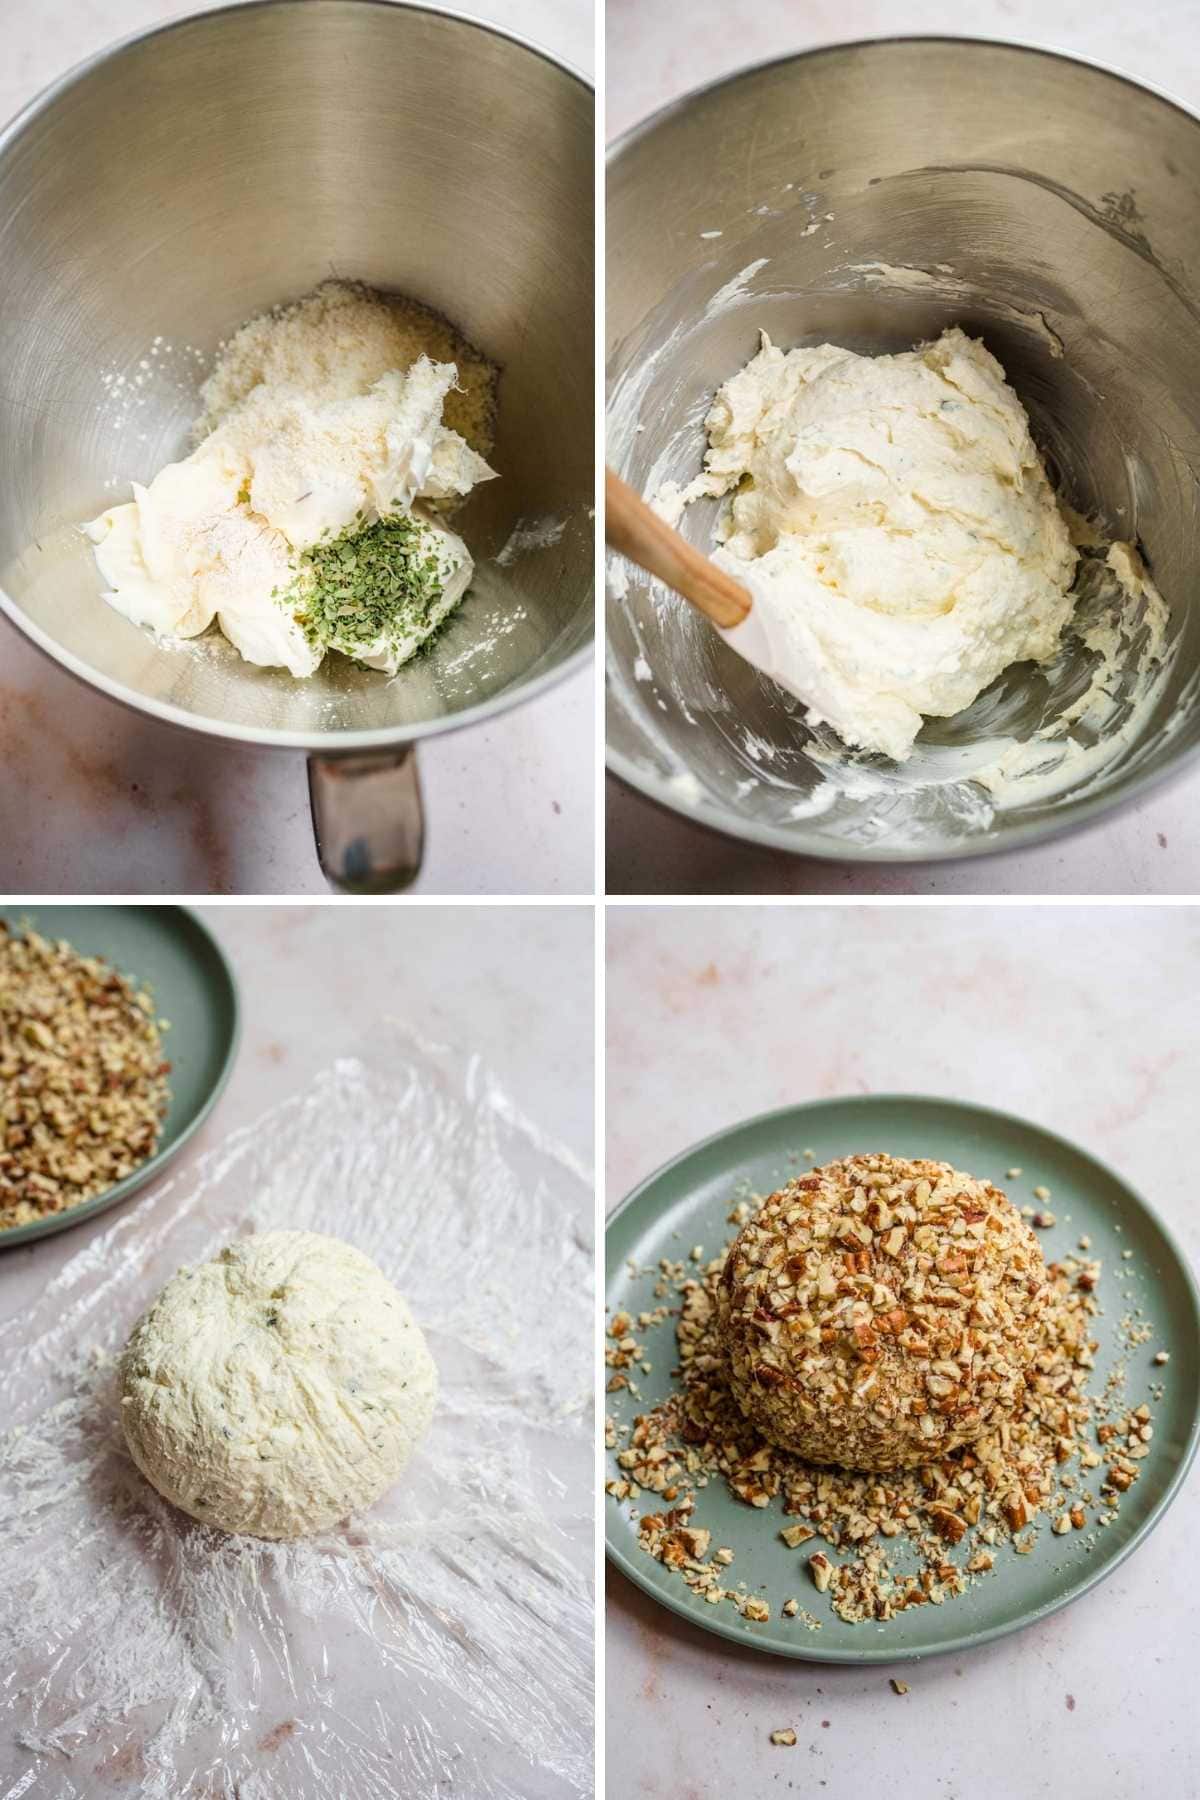 Garlic Parmesan Cheese Ball Collage